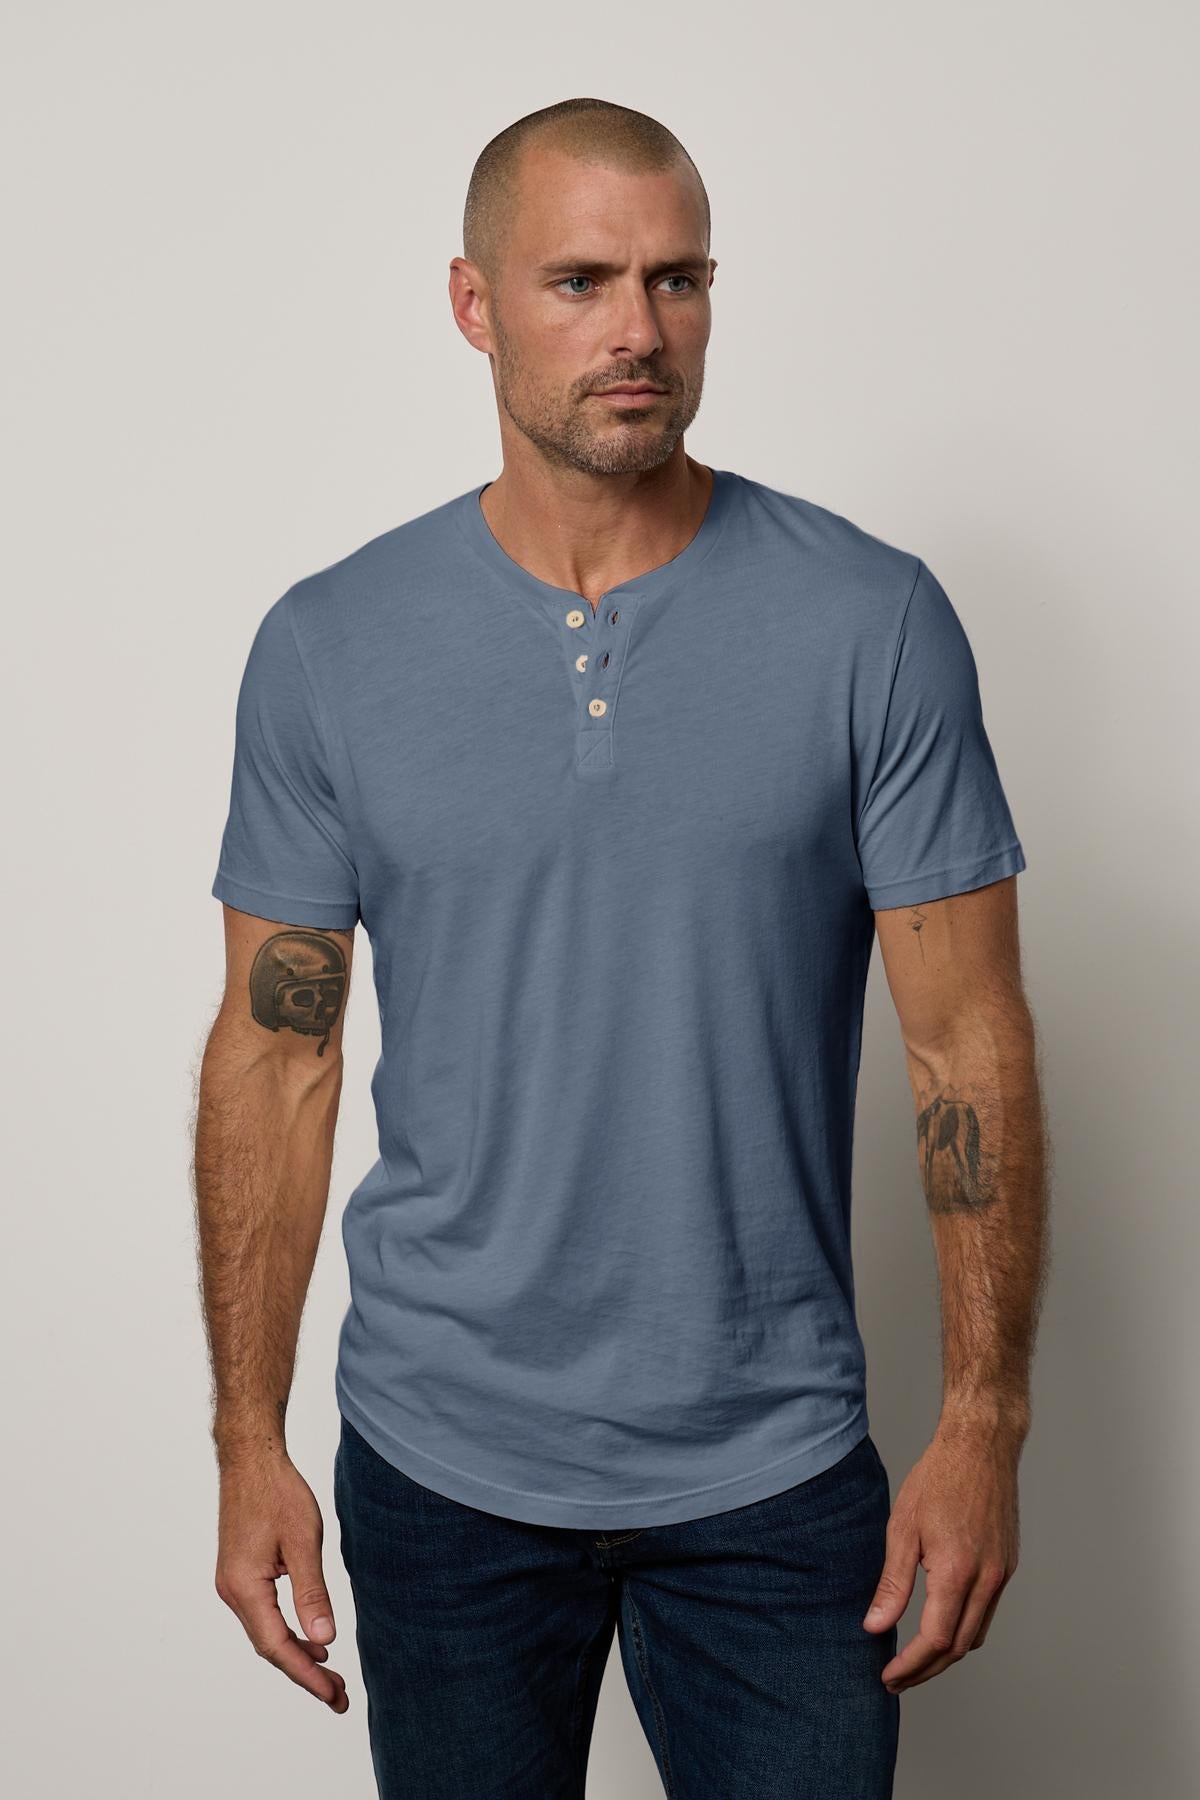 A man wearing a blue Velvet by Graham & Spencer Fulton Short Sleeve Henley t-shirt.-35567476998337